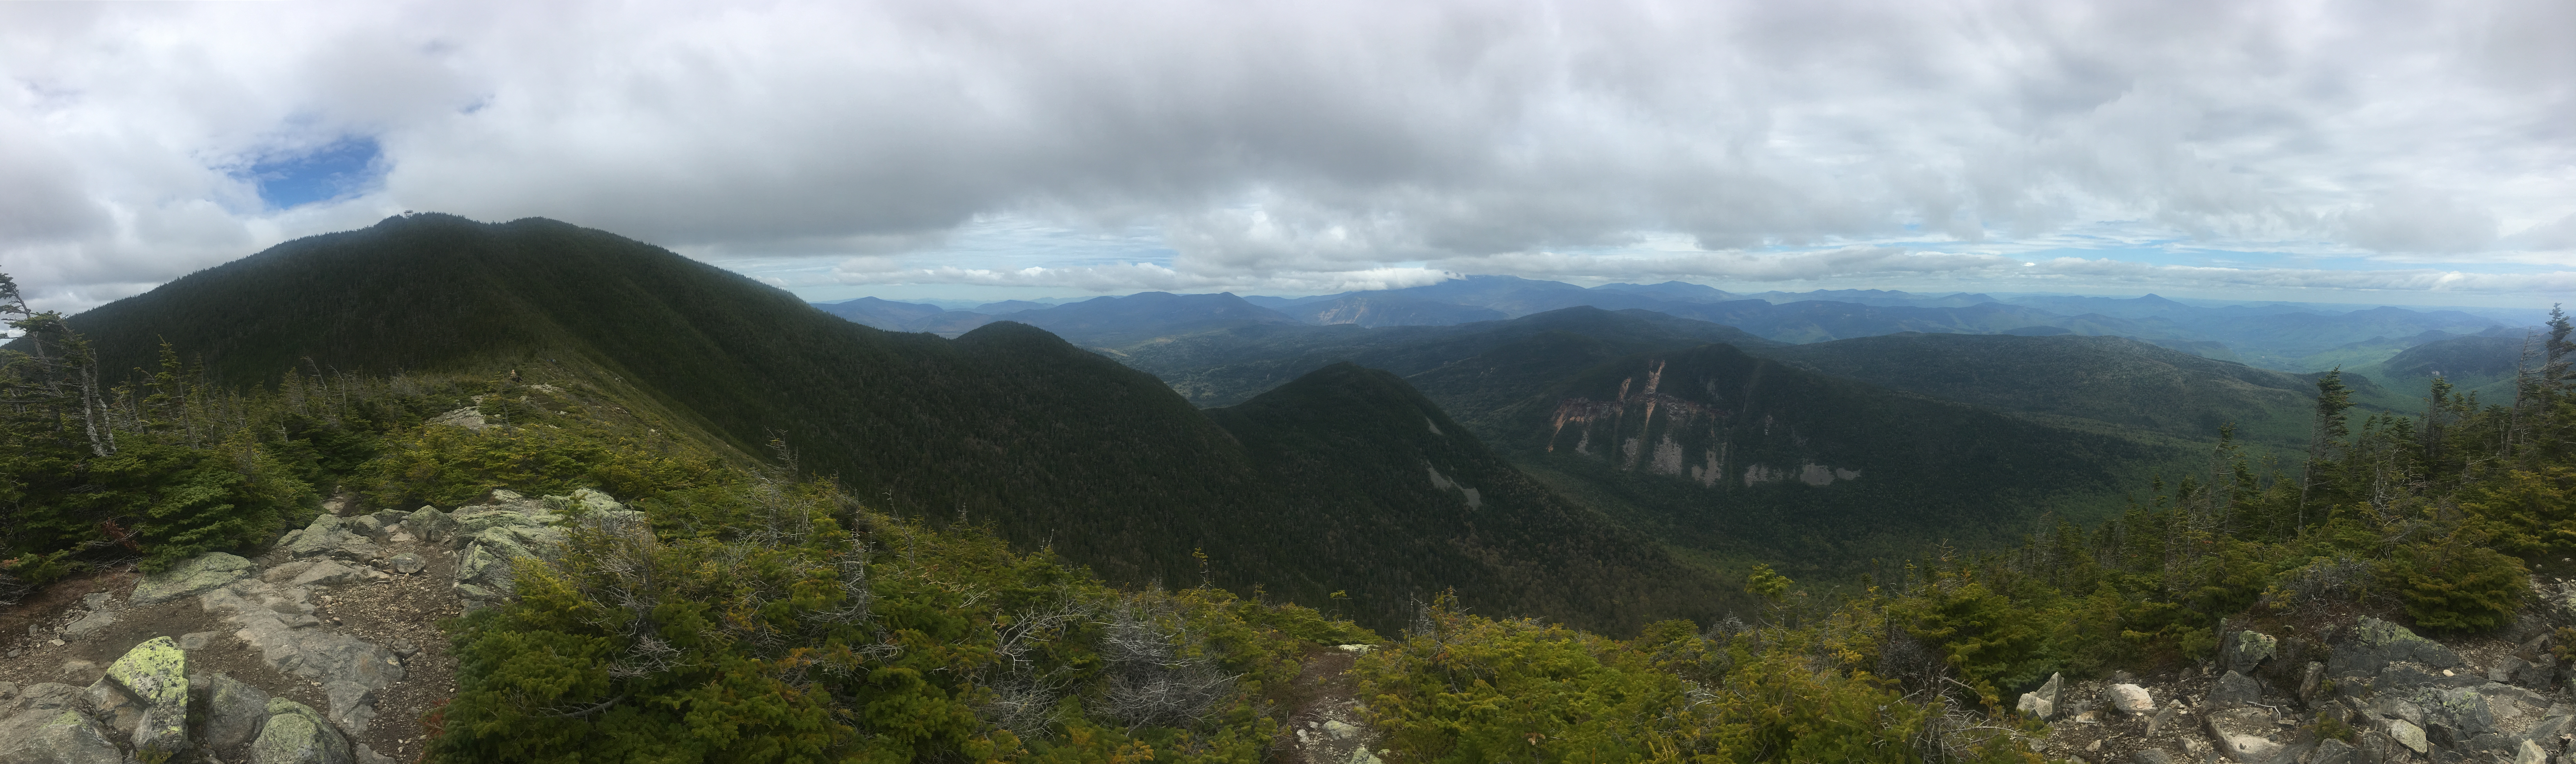 Panoramic of Mount Carrigain Ridge